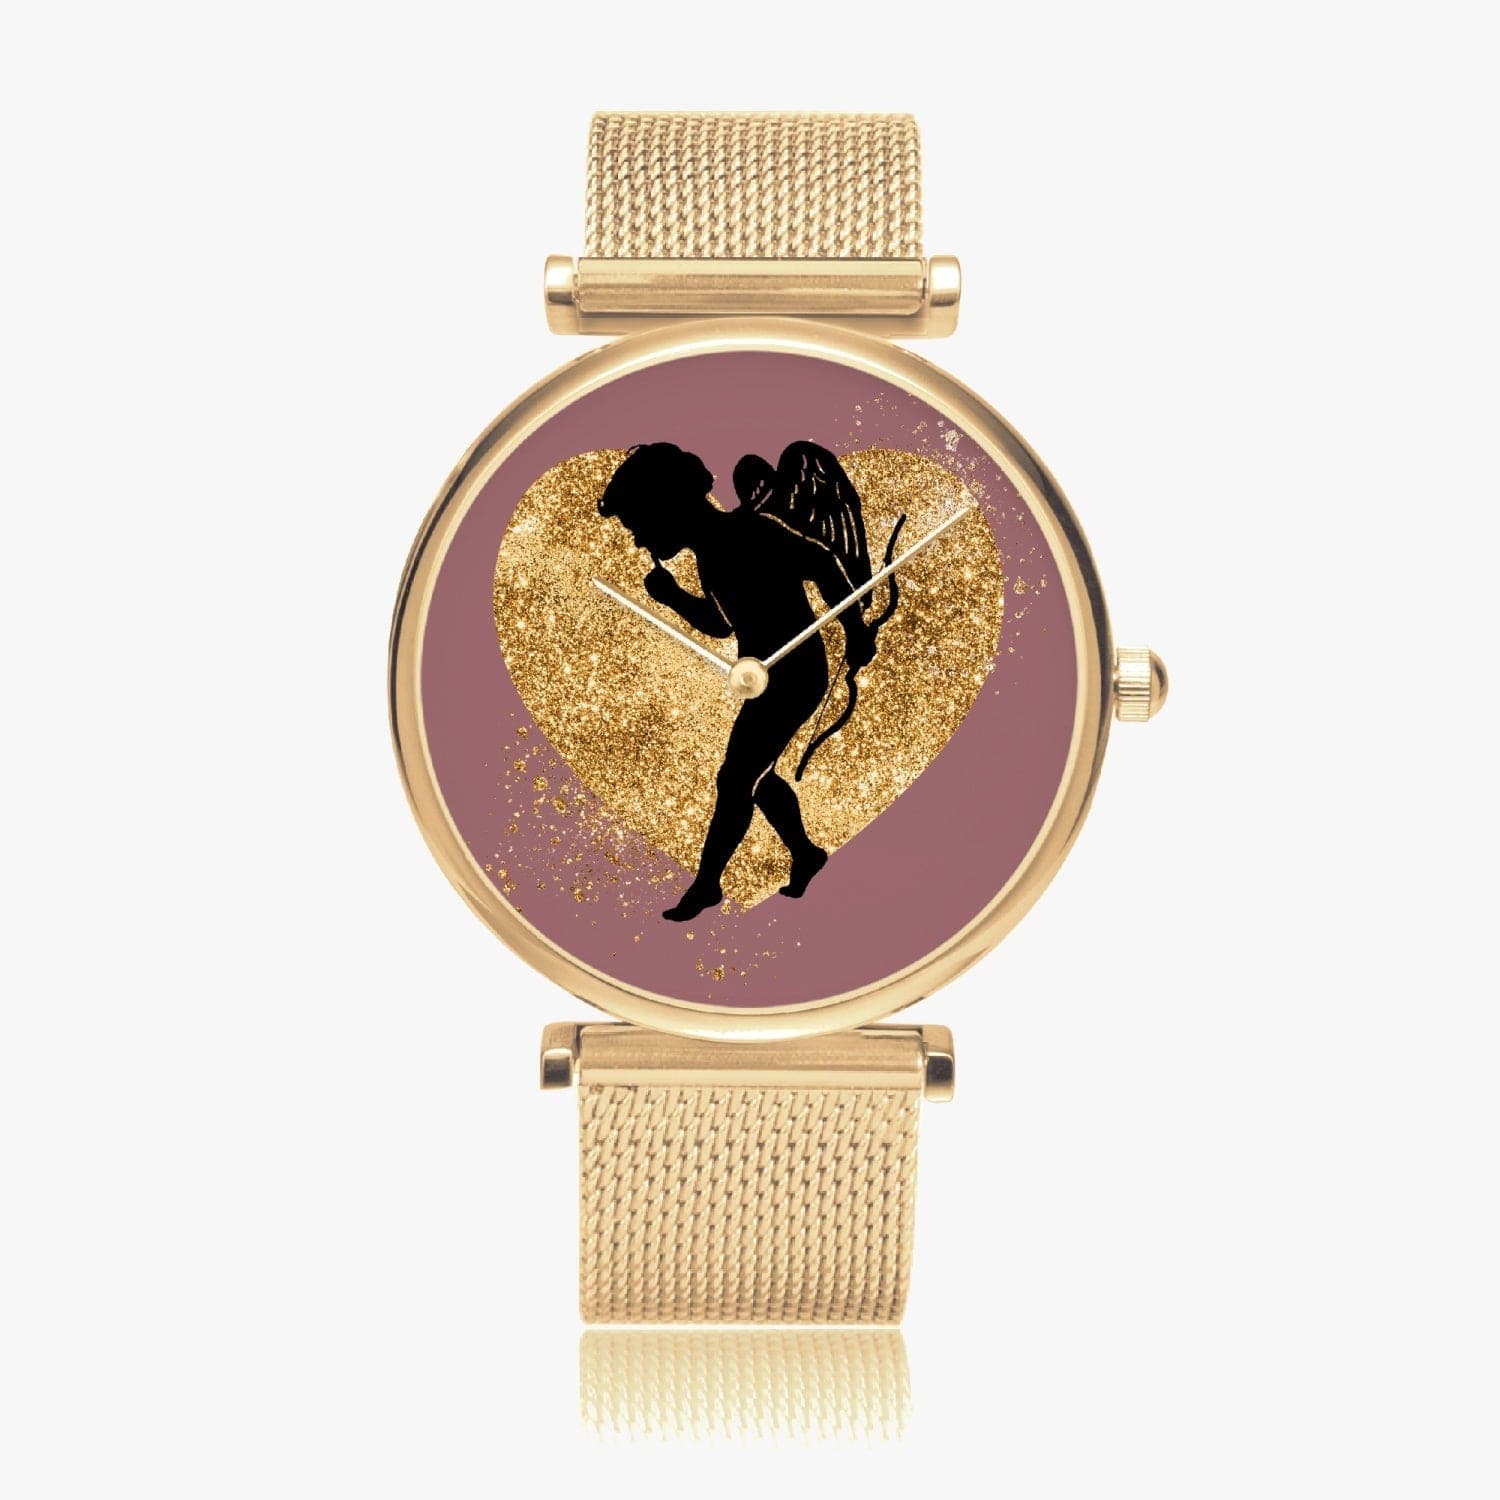 Cupid and the golden heart,  New Stylish Ultra-Thin Quartz Watch, designed by Sensus Studio Design